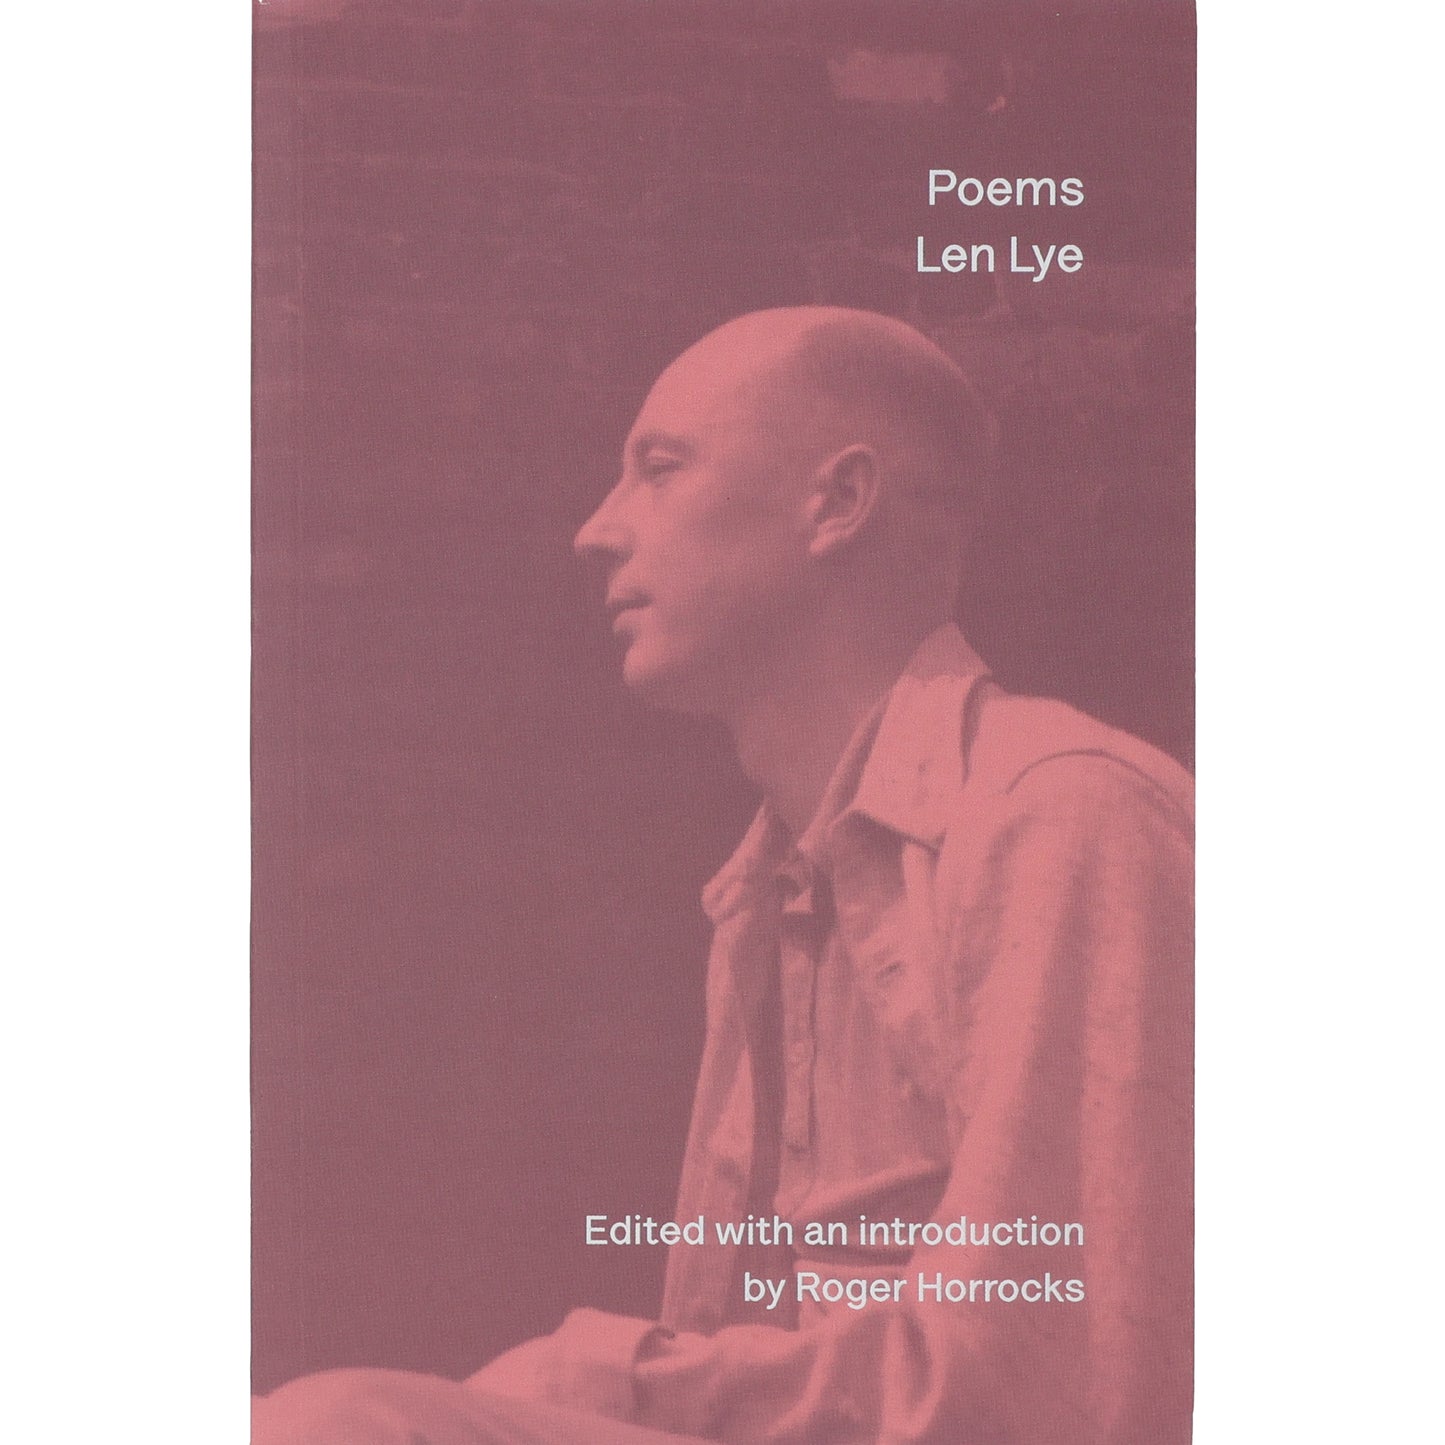 Poems by Len Lye